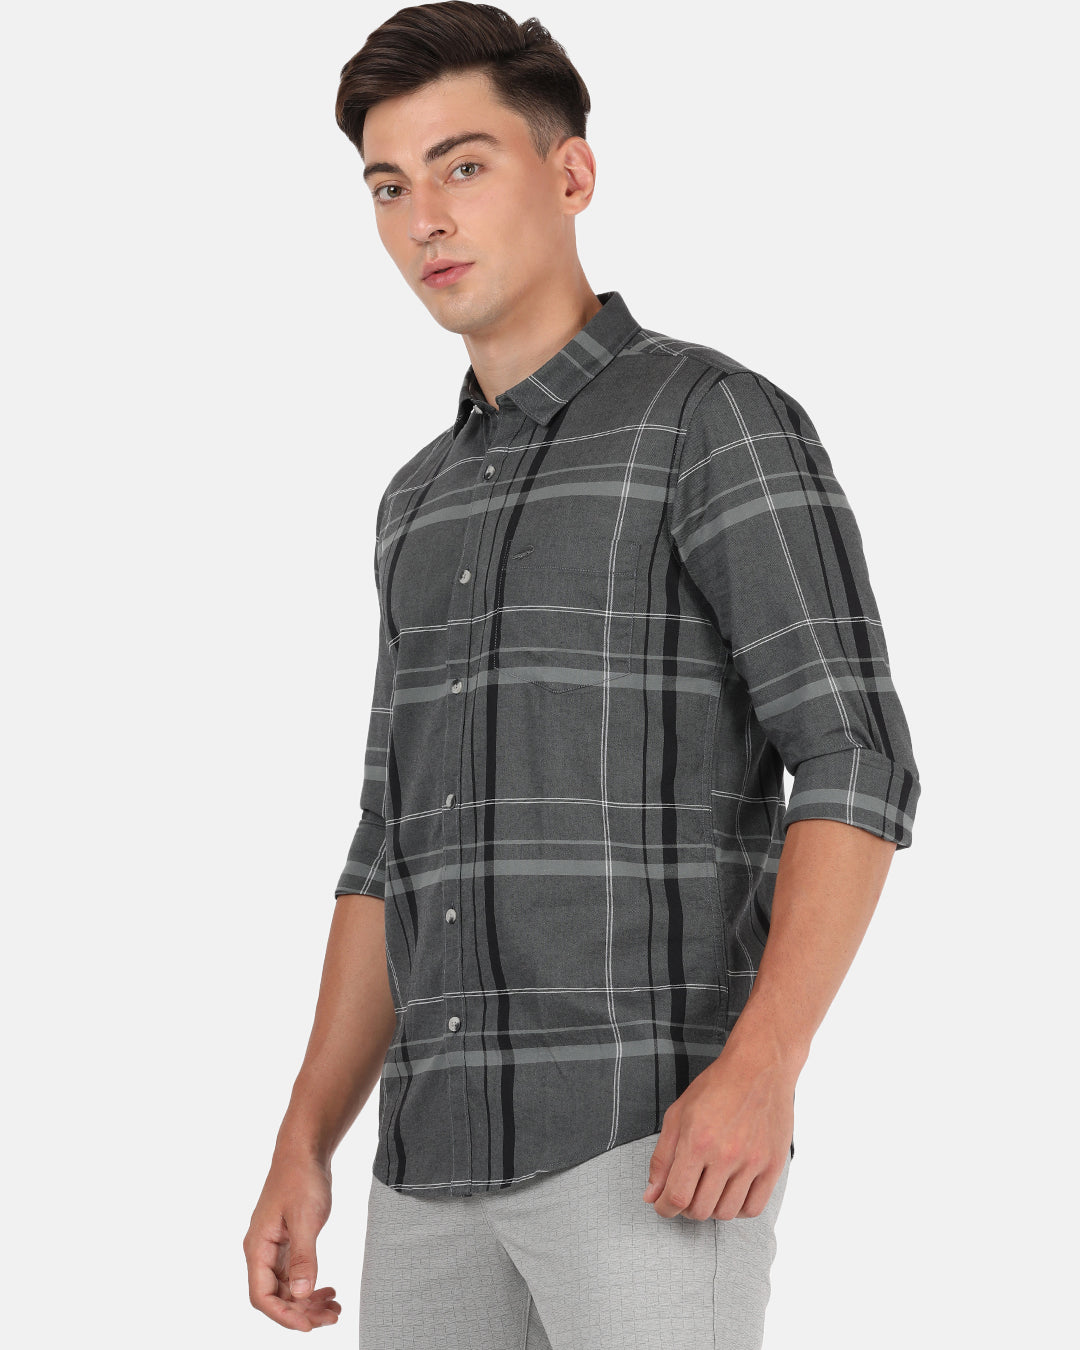 Crocodile Men's Casual Full Sleeve Slim Fit Checks Dark Grey With Collar Shirt Online